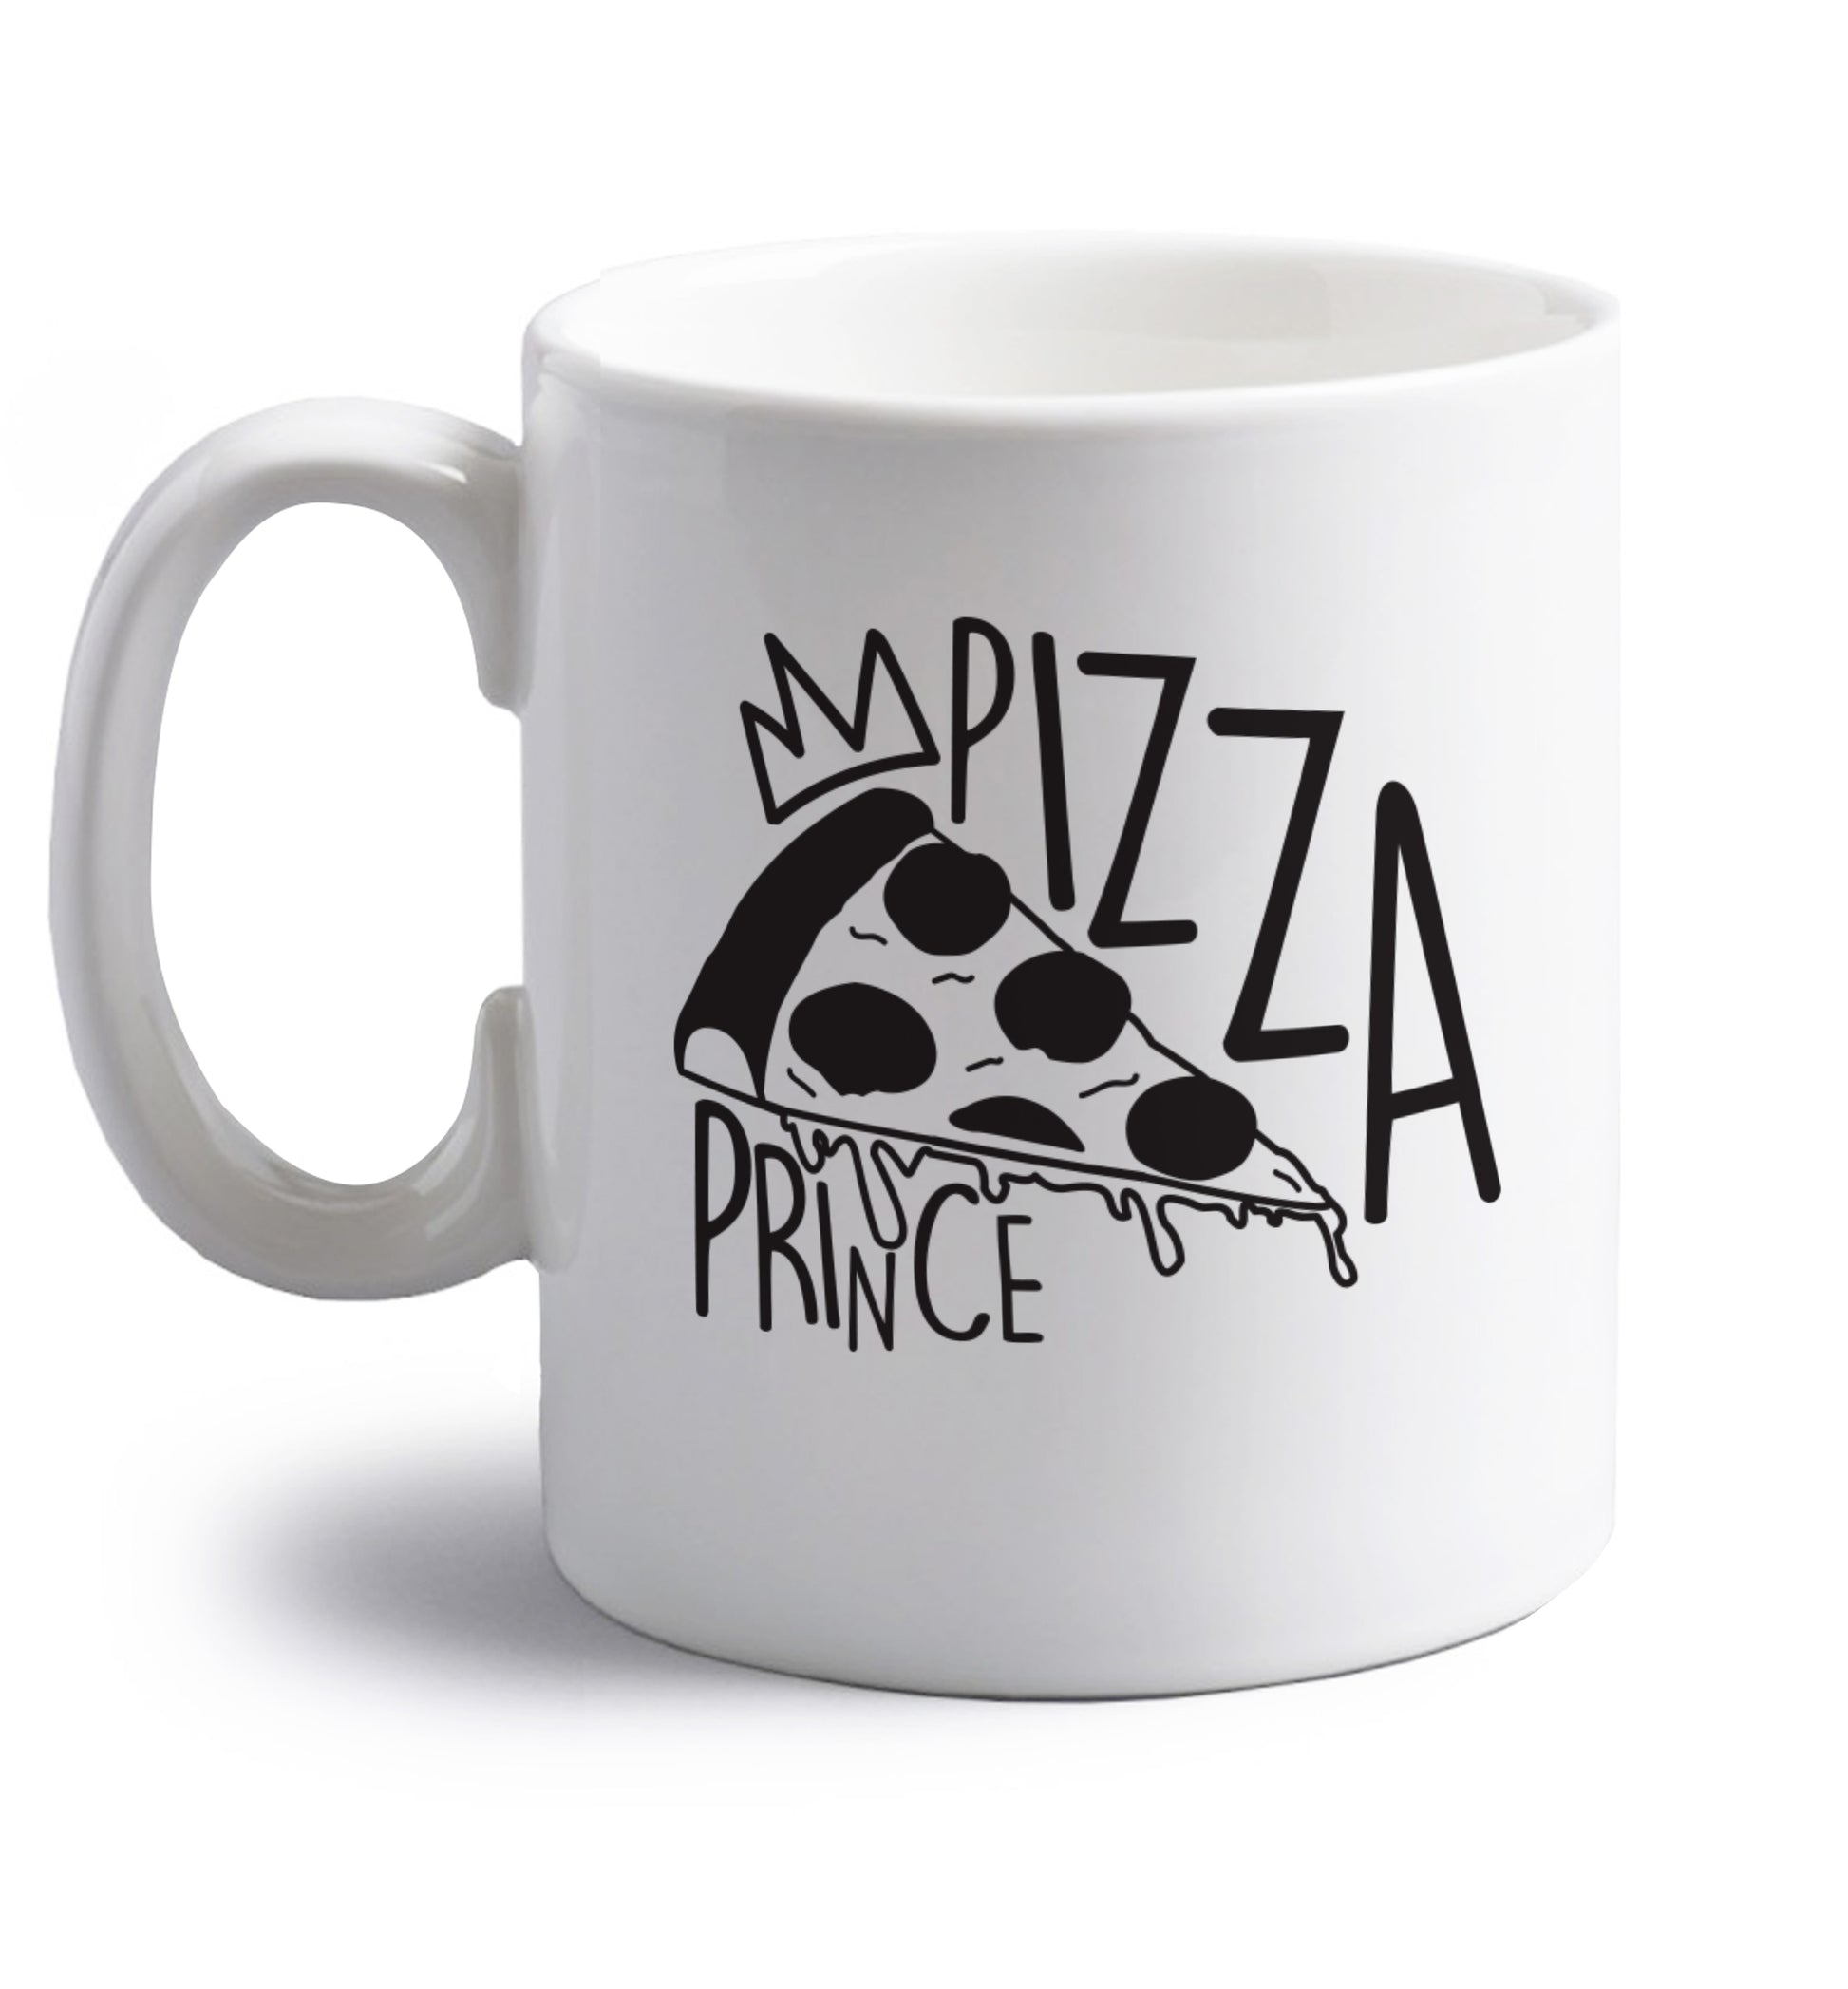 Pizza Prince right handed white ceramic mug 